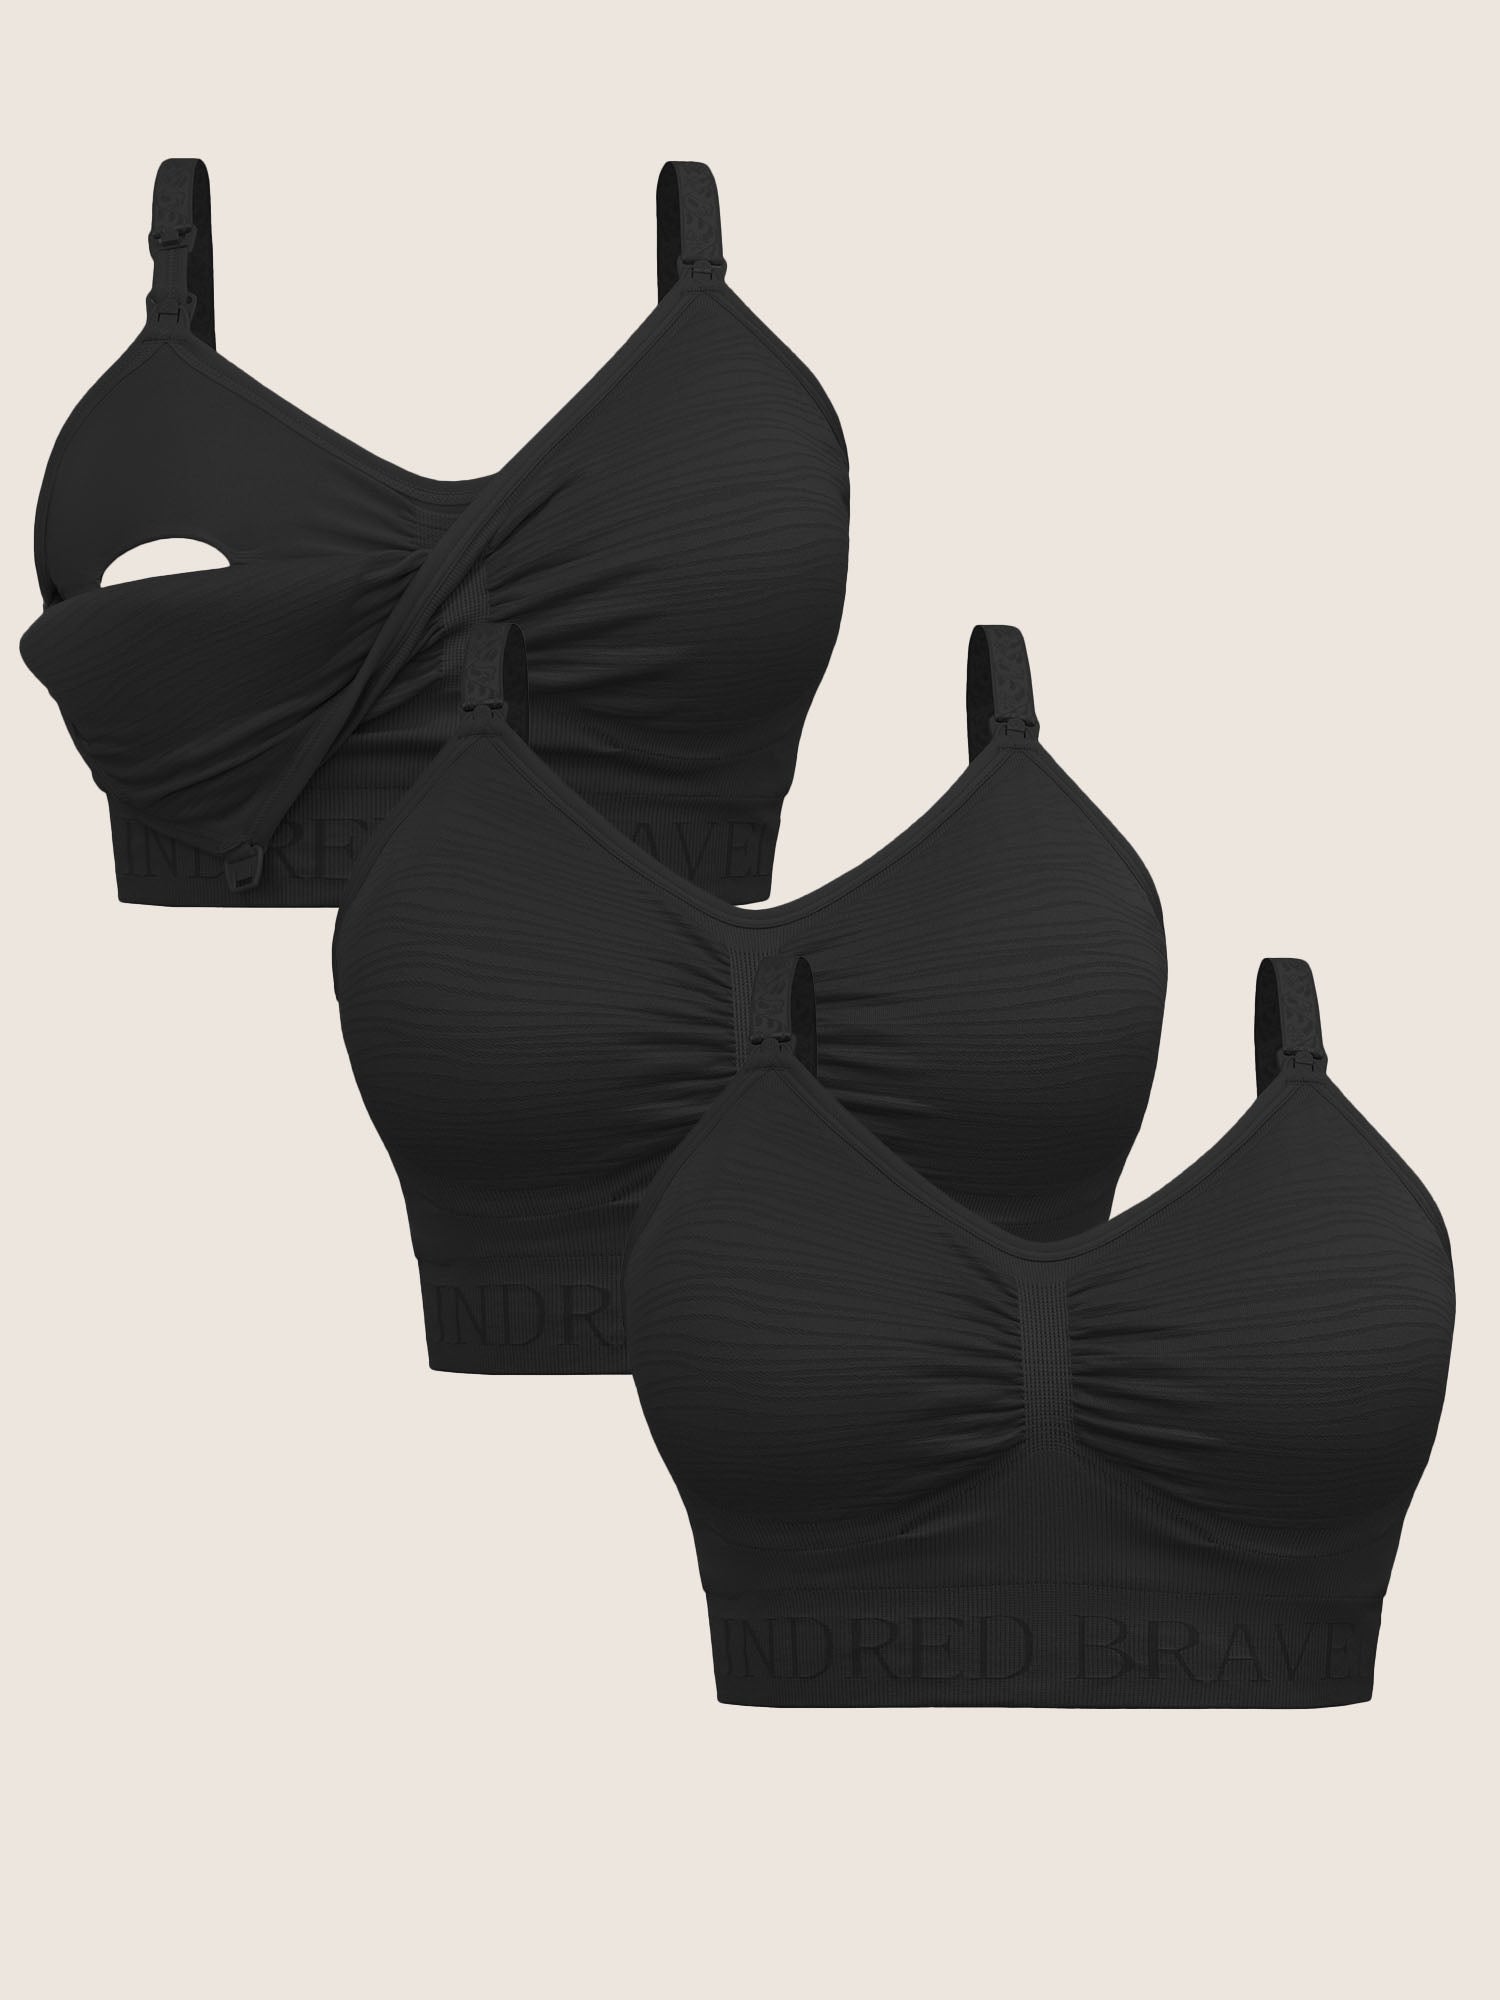 Medela womens Seamless nursing bras, Black, Small Pack of 1 US at   Women's Clothing store